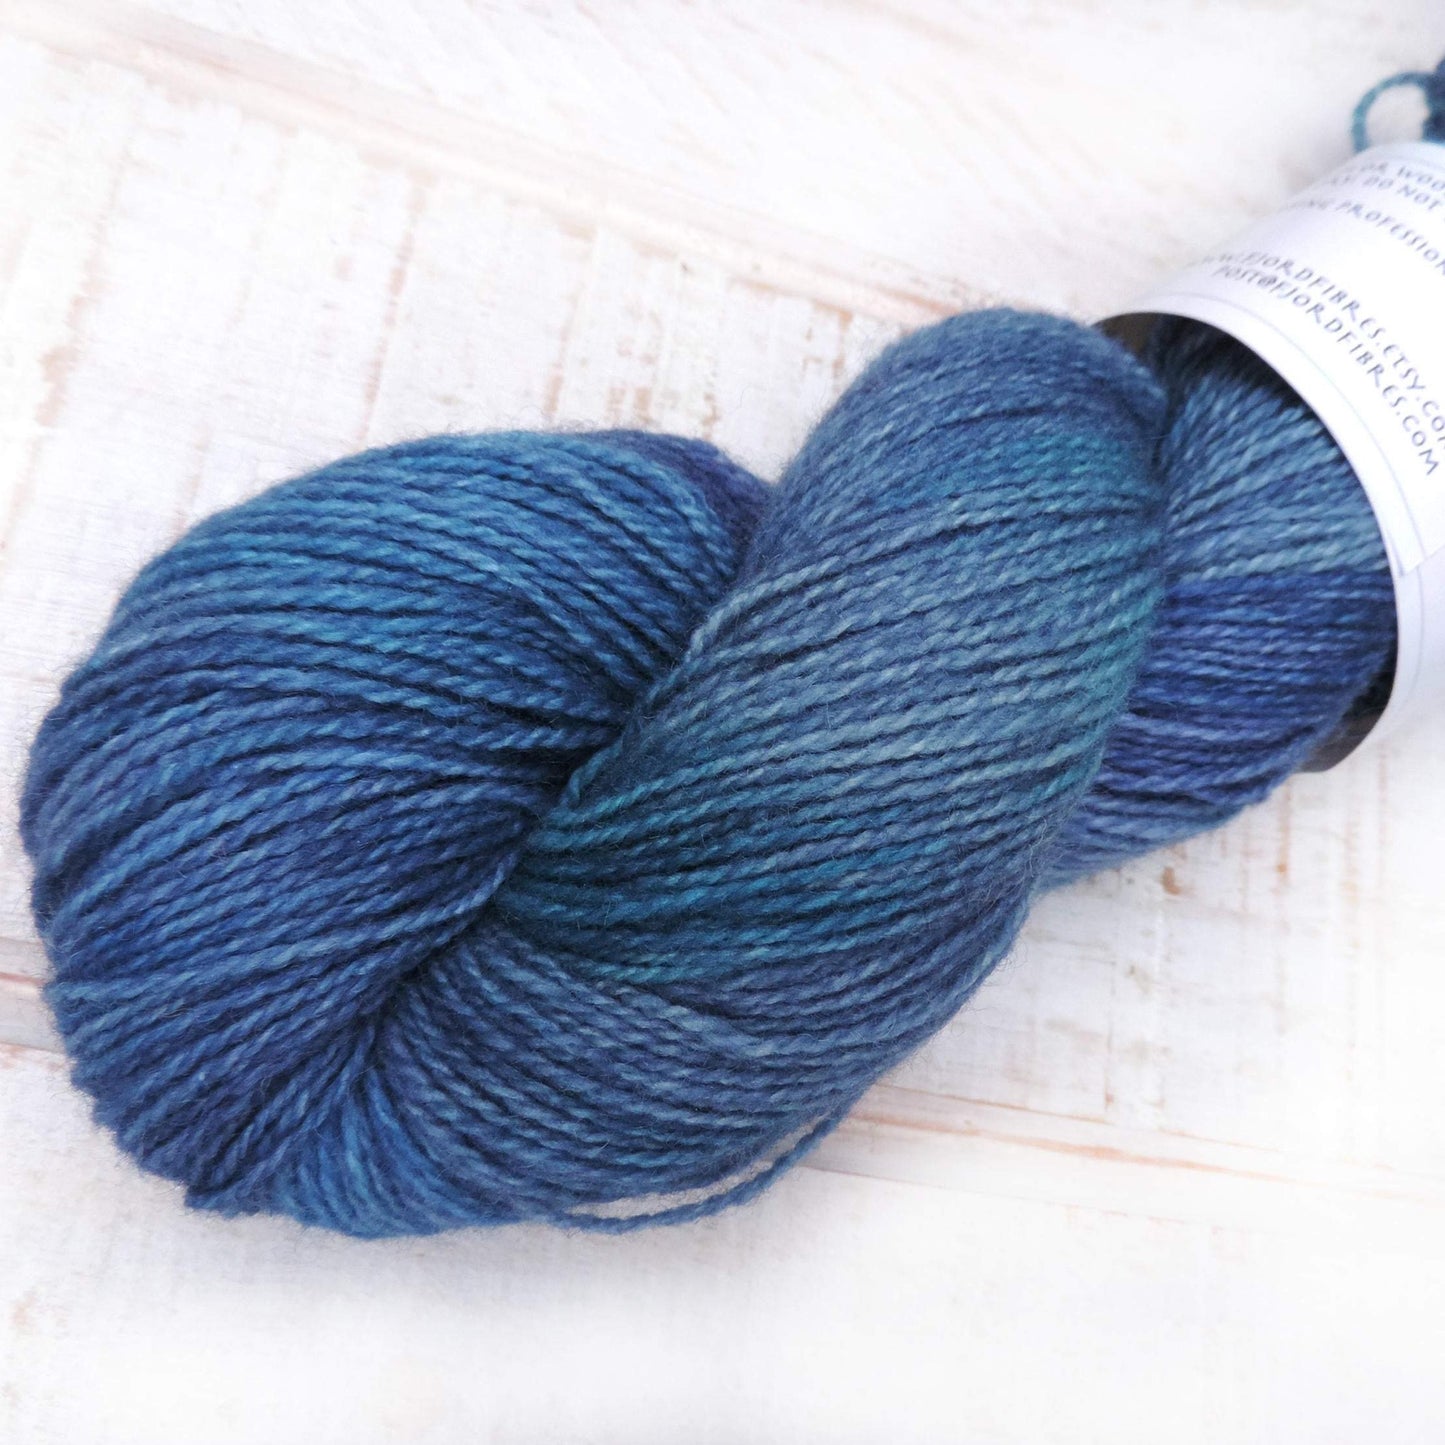 Polar Nights - Trollford sock -  Hand Dyed Yarn - Tonal Yarn